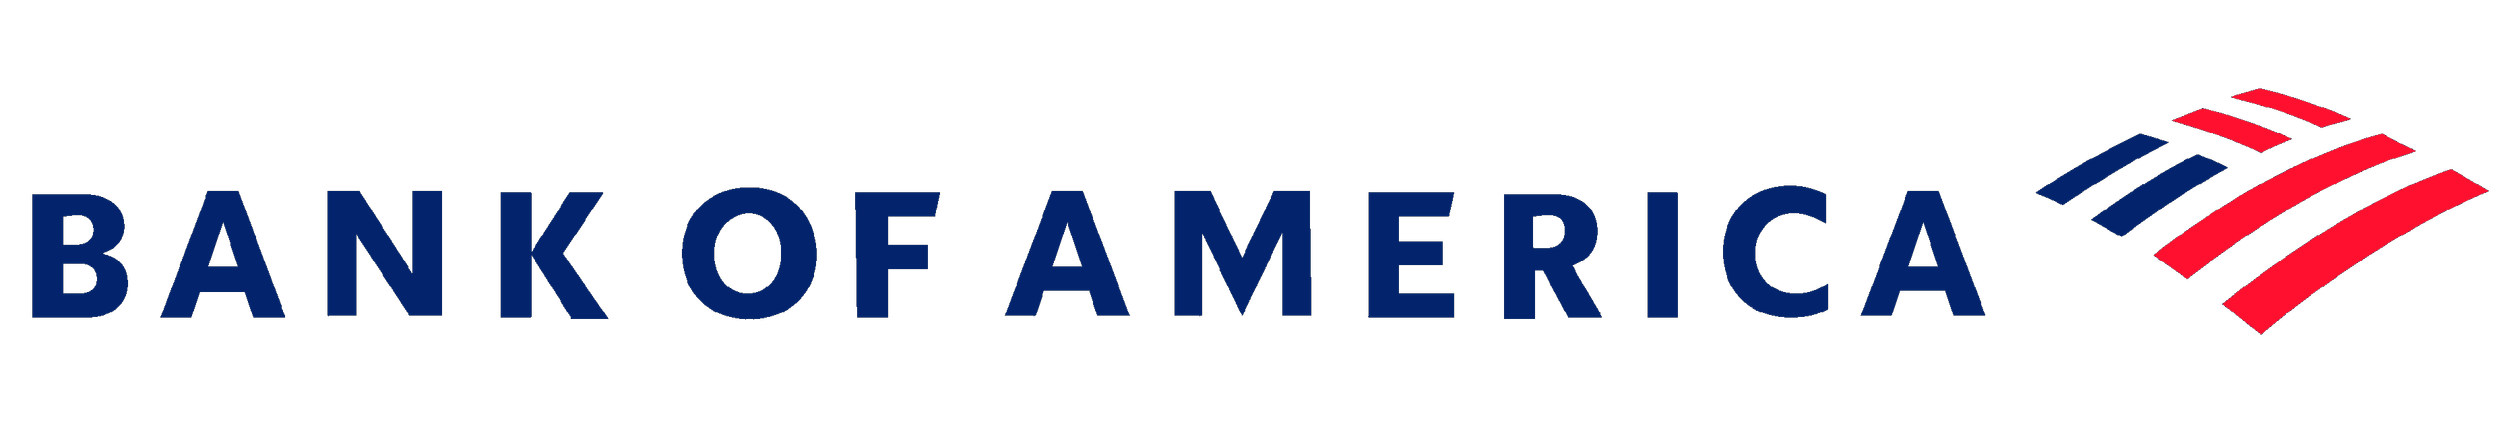 Bank-of-America-Logo.png